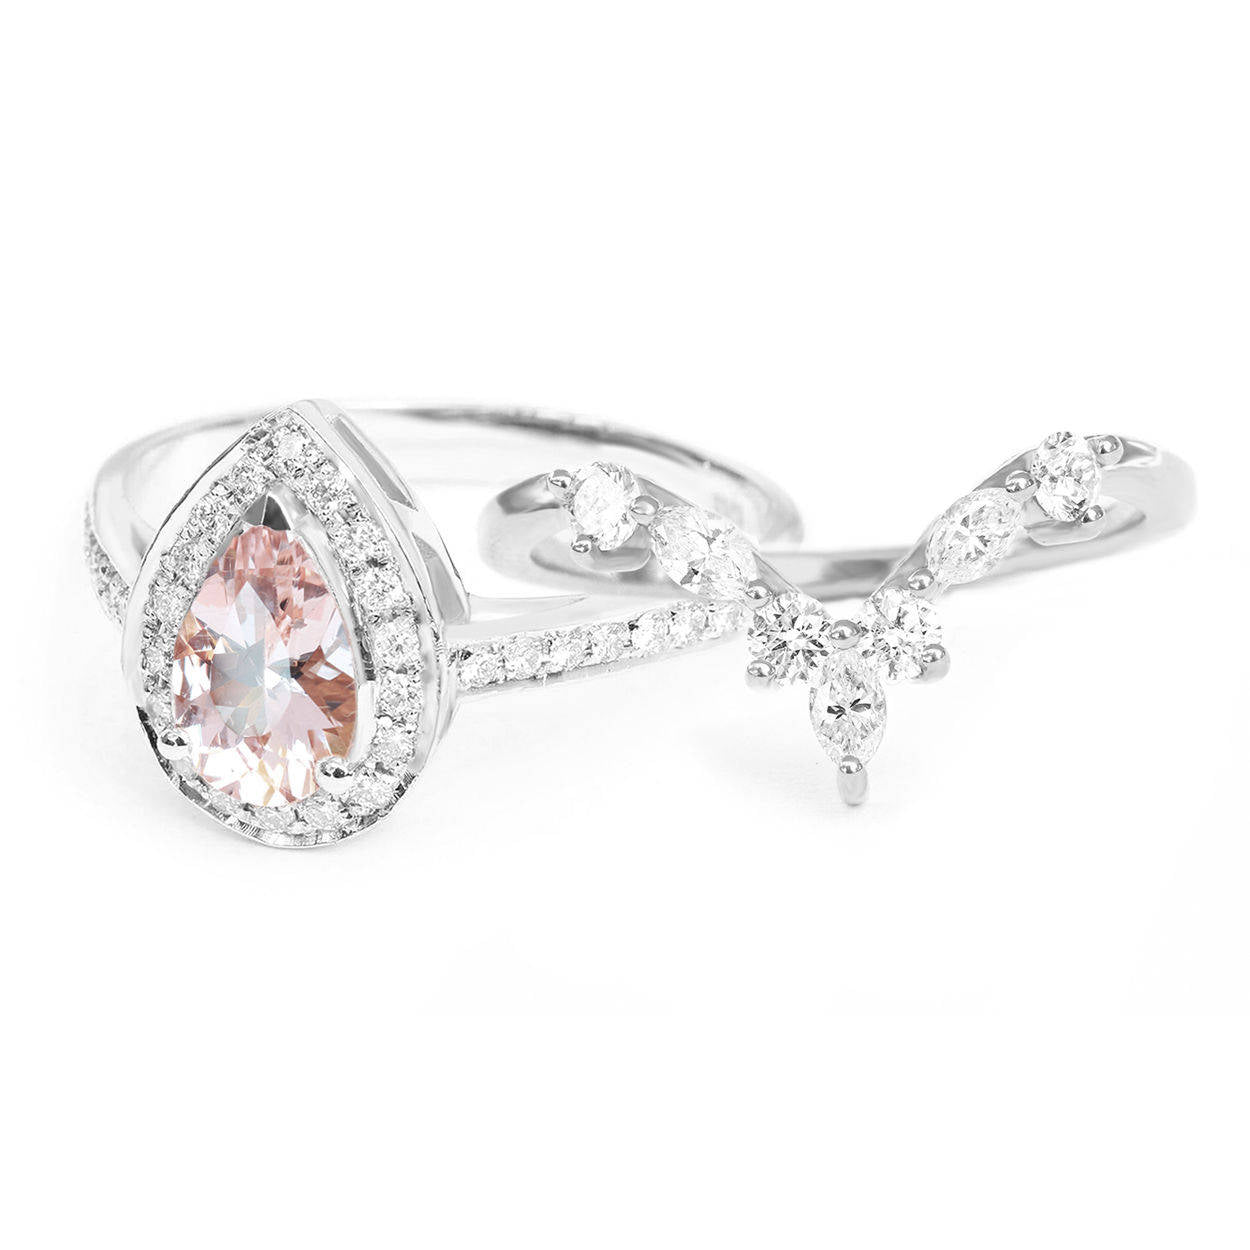 Nia & Hermes - Pear Morganite & Diamond Halo Ceremonial Ring set - sillyshinydiamonds